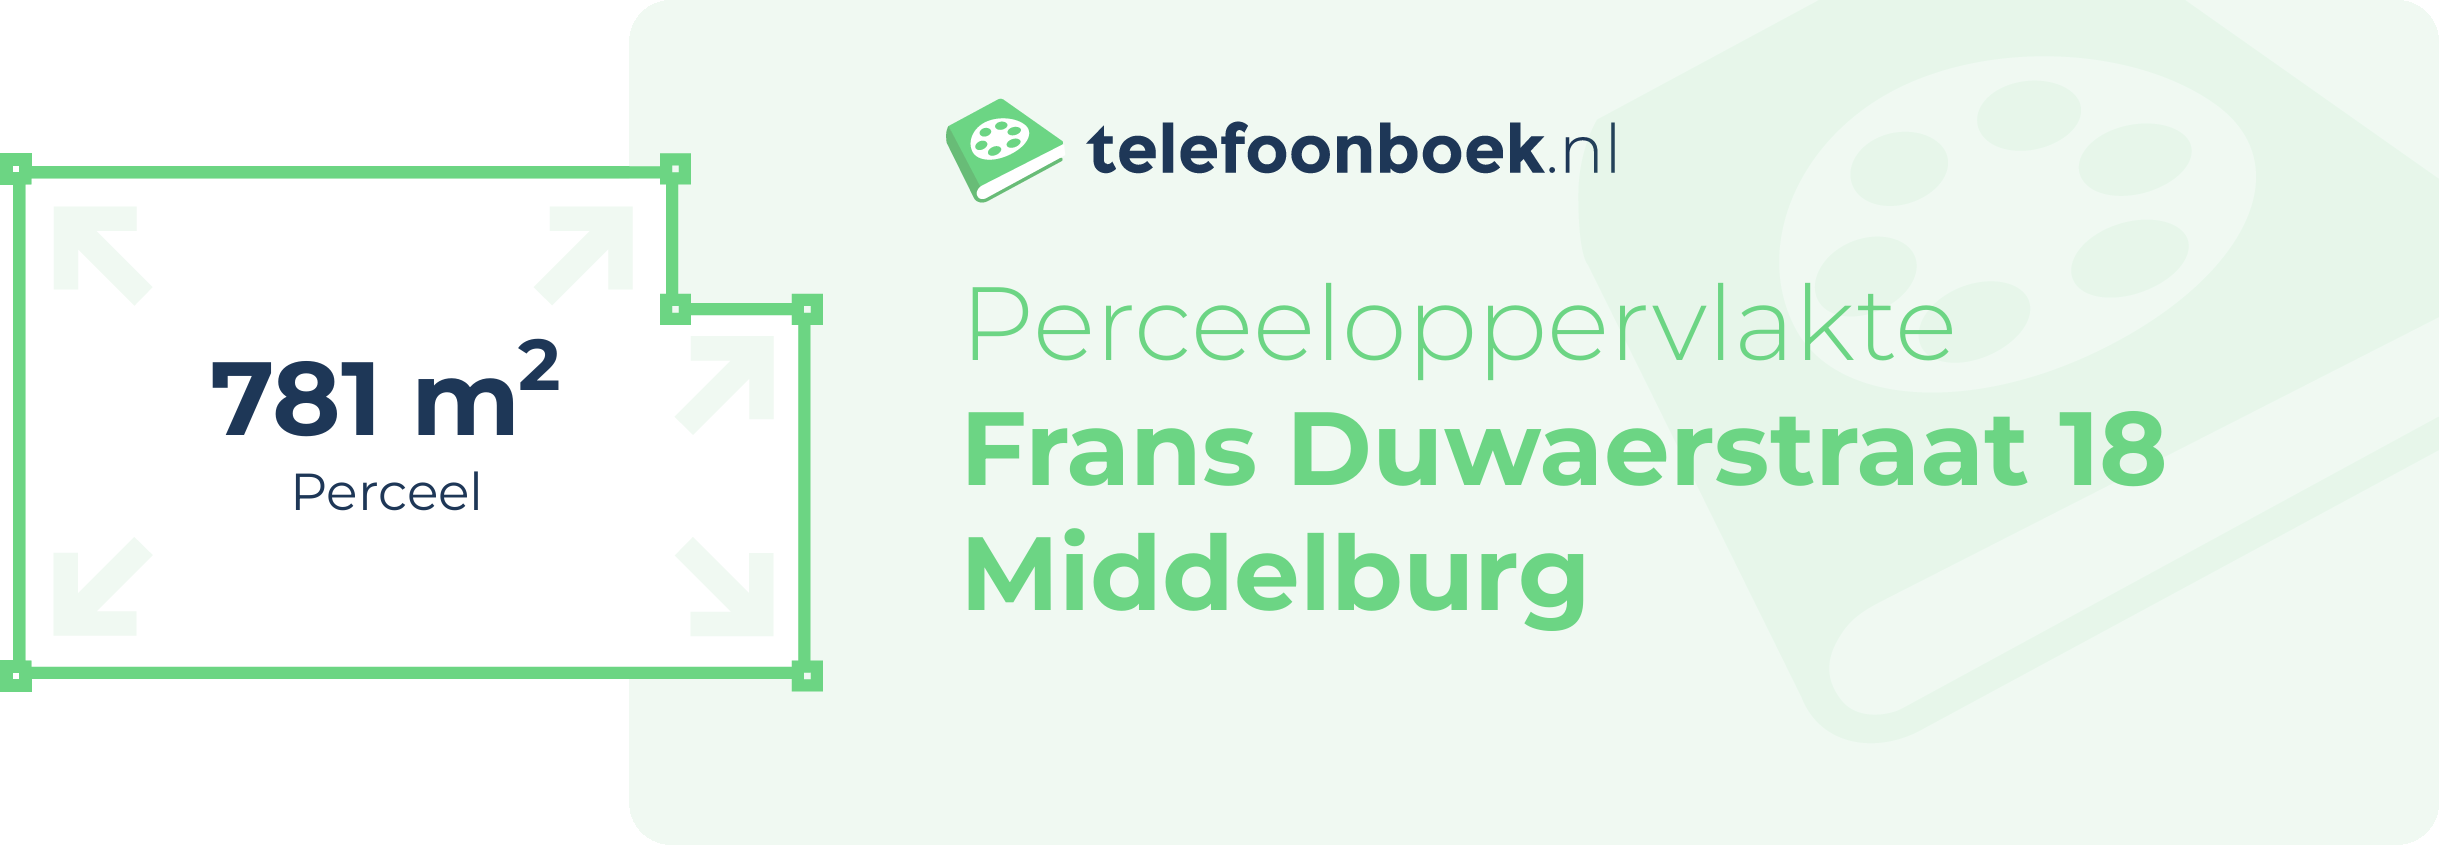 Perceeloppervlakte Frans Duwaerstraat 18 Middelburg